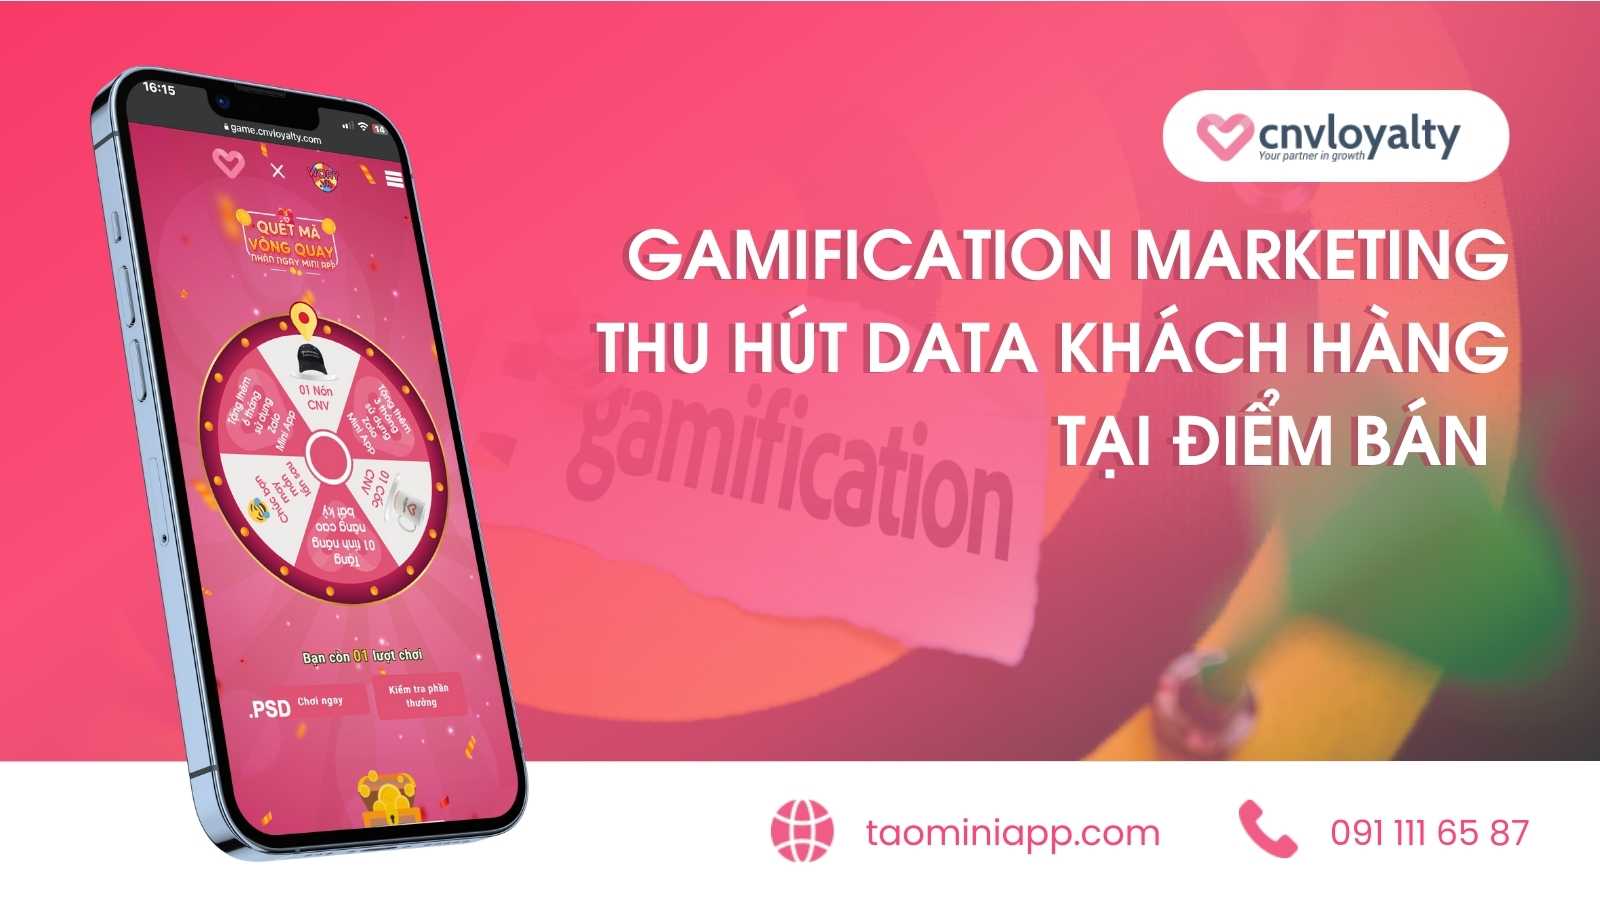 Gamification-Marketing-thu-hut-data-khach-hang-tai-diem-ban